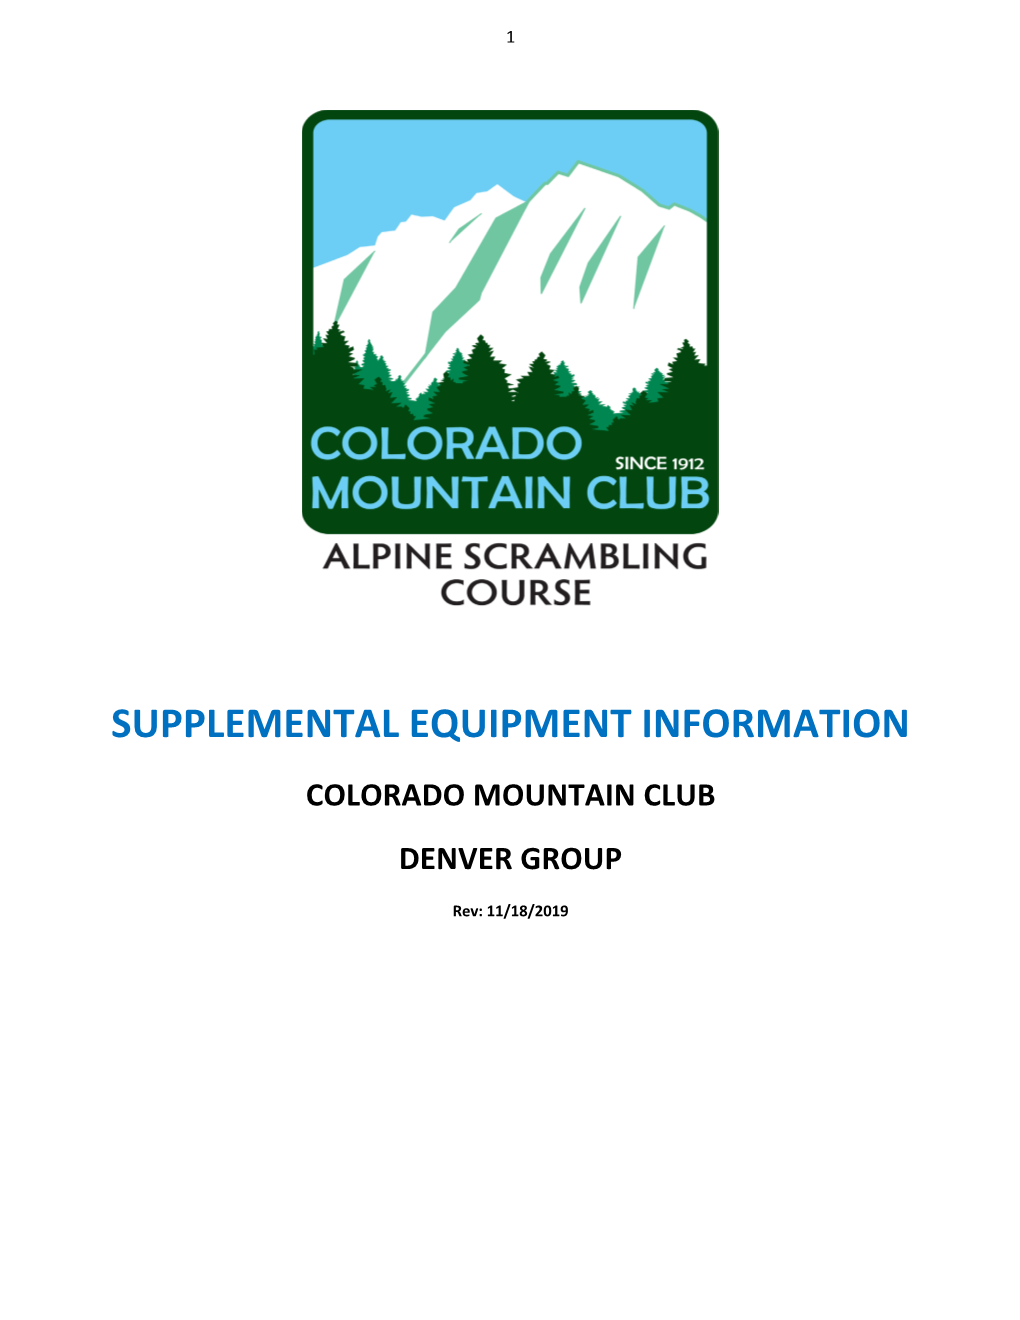 Supplemental Equipment Information Colorado Mountain Club Denver Group